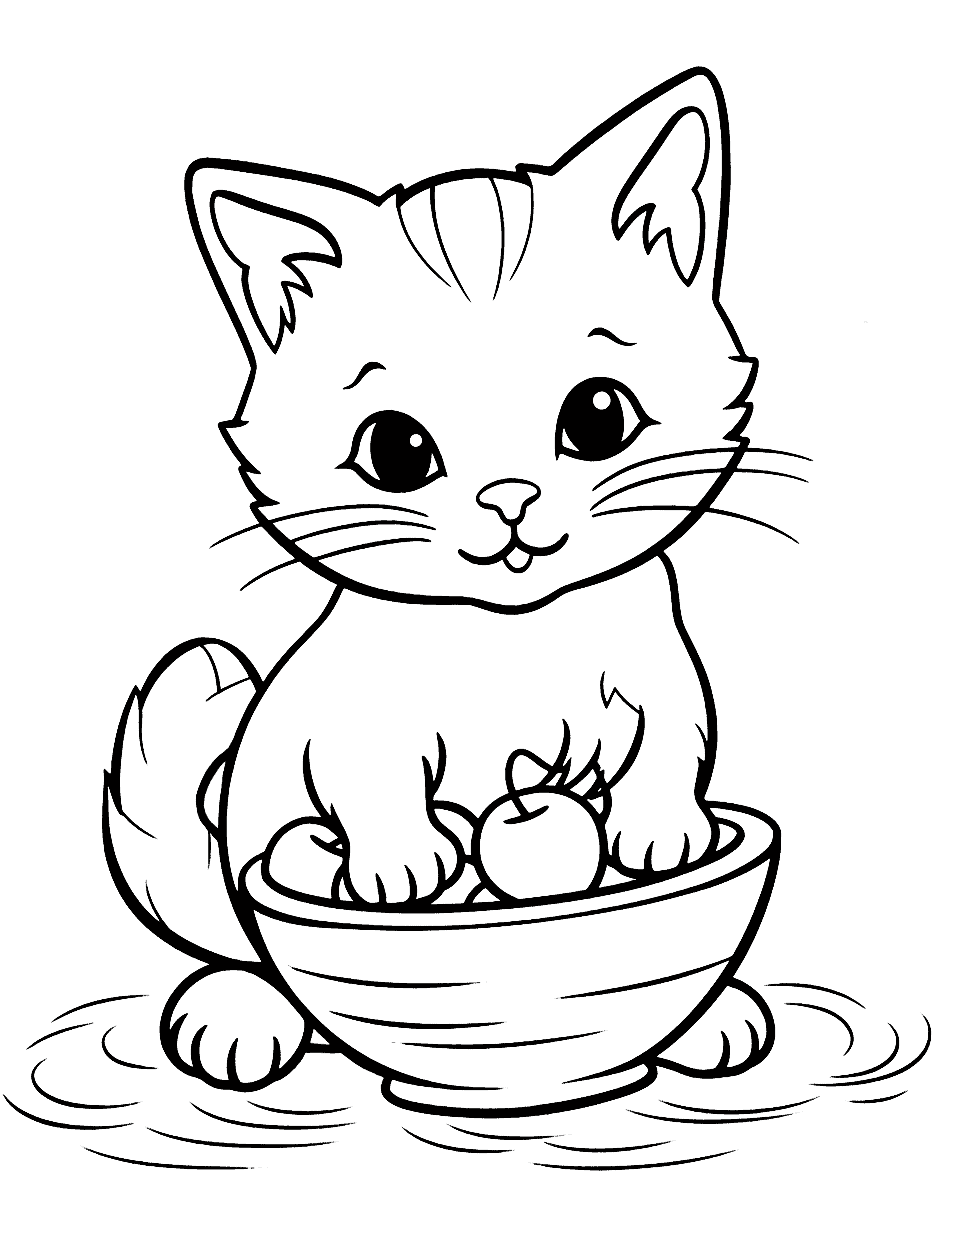 Kawaii Cat With a Fruit Salad Coloring Page - A cute kawaii cat eating a colorful fruit salad from a big bowl.